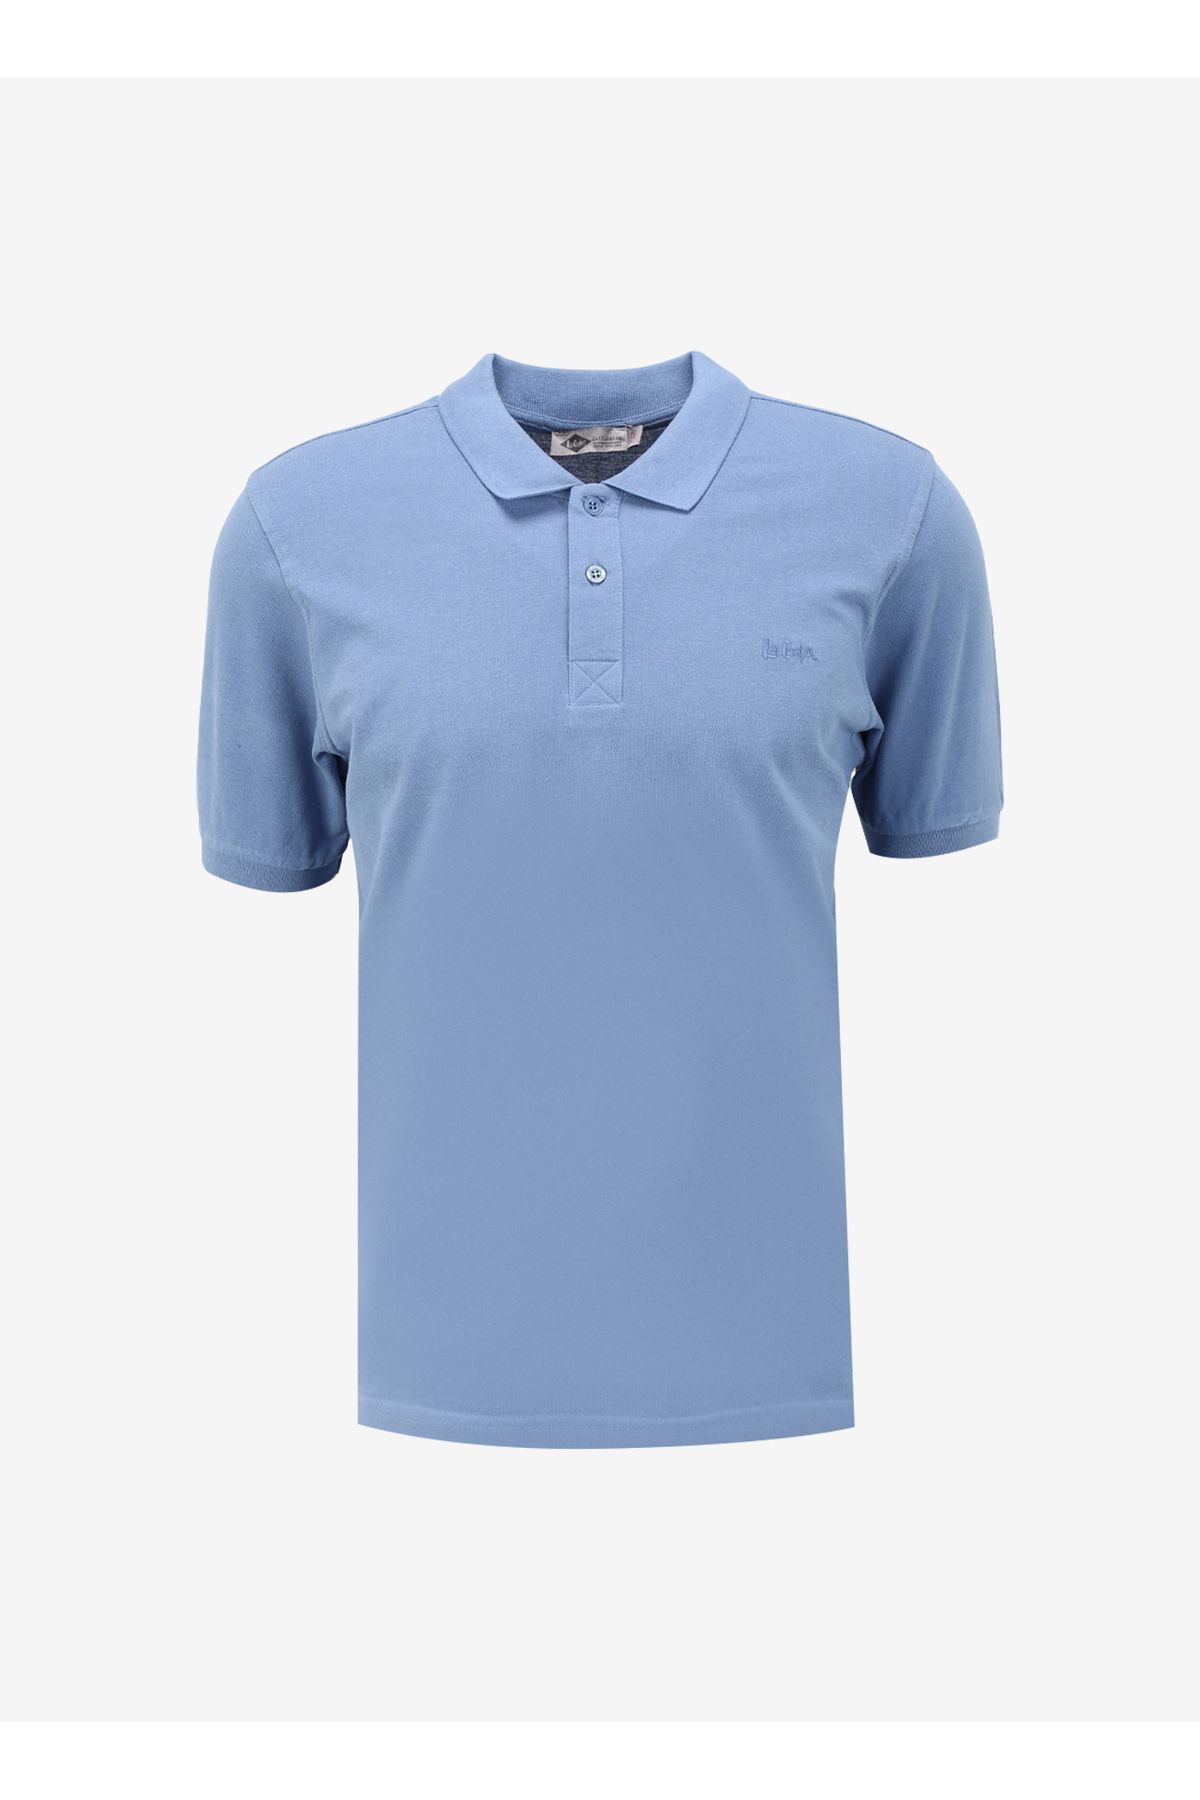 Lee Cooper Mavi Erkek Polo T-Shirt 242 LCM 242025 TWINS A.MAVİ